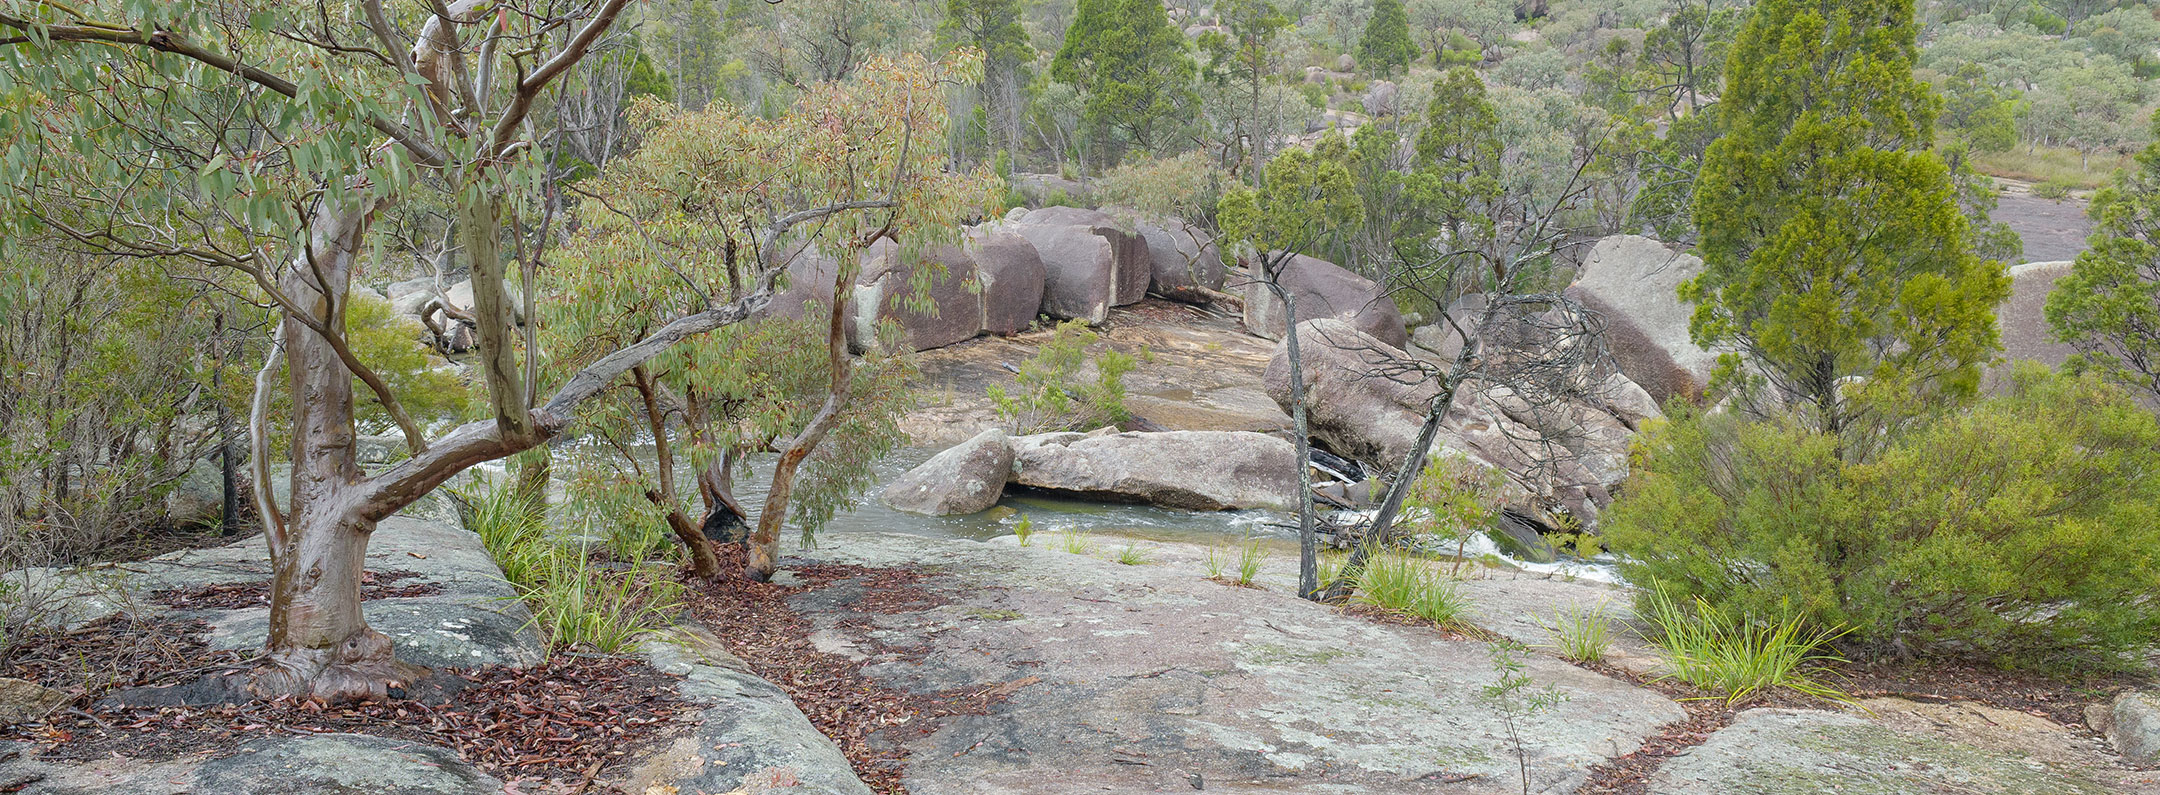 Eucalypts overlook the rugged beauty of the granite flanked Bald Rock Creek in Girraween National Park, Australia